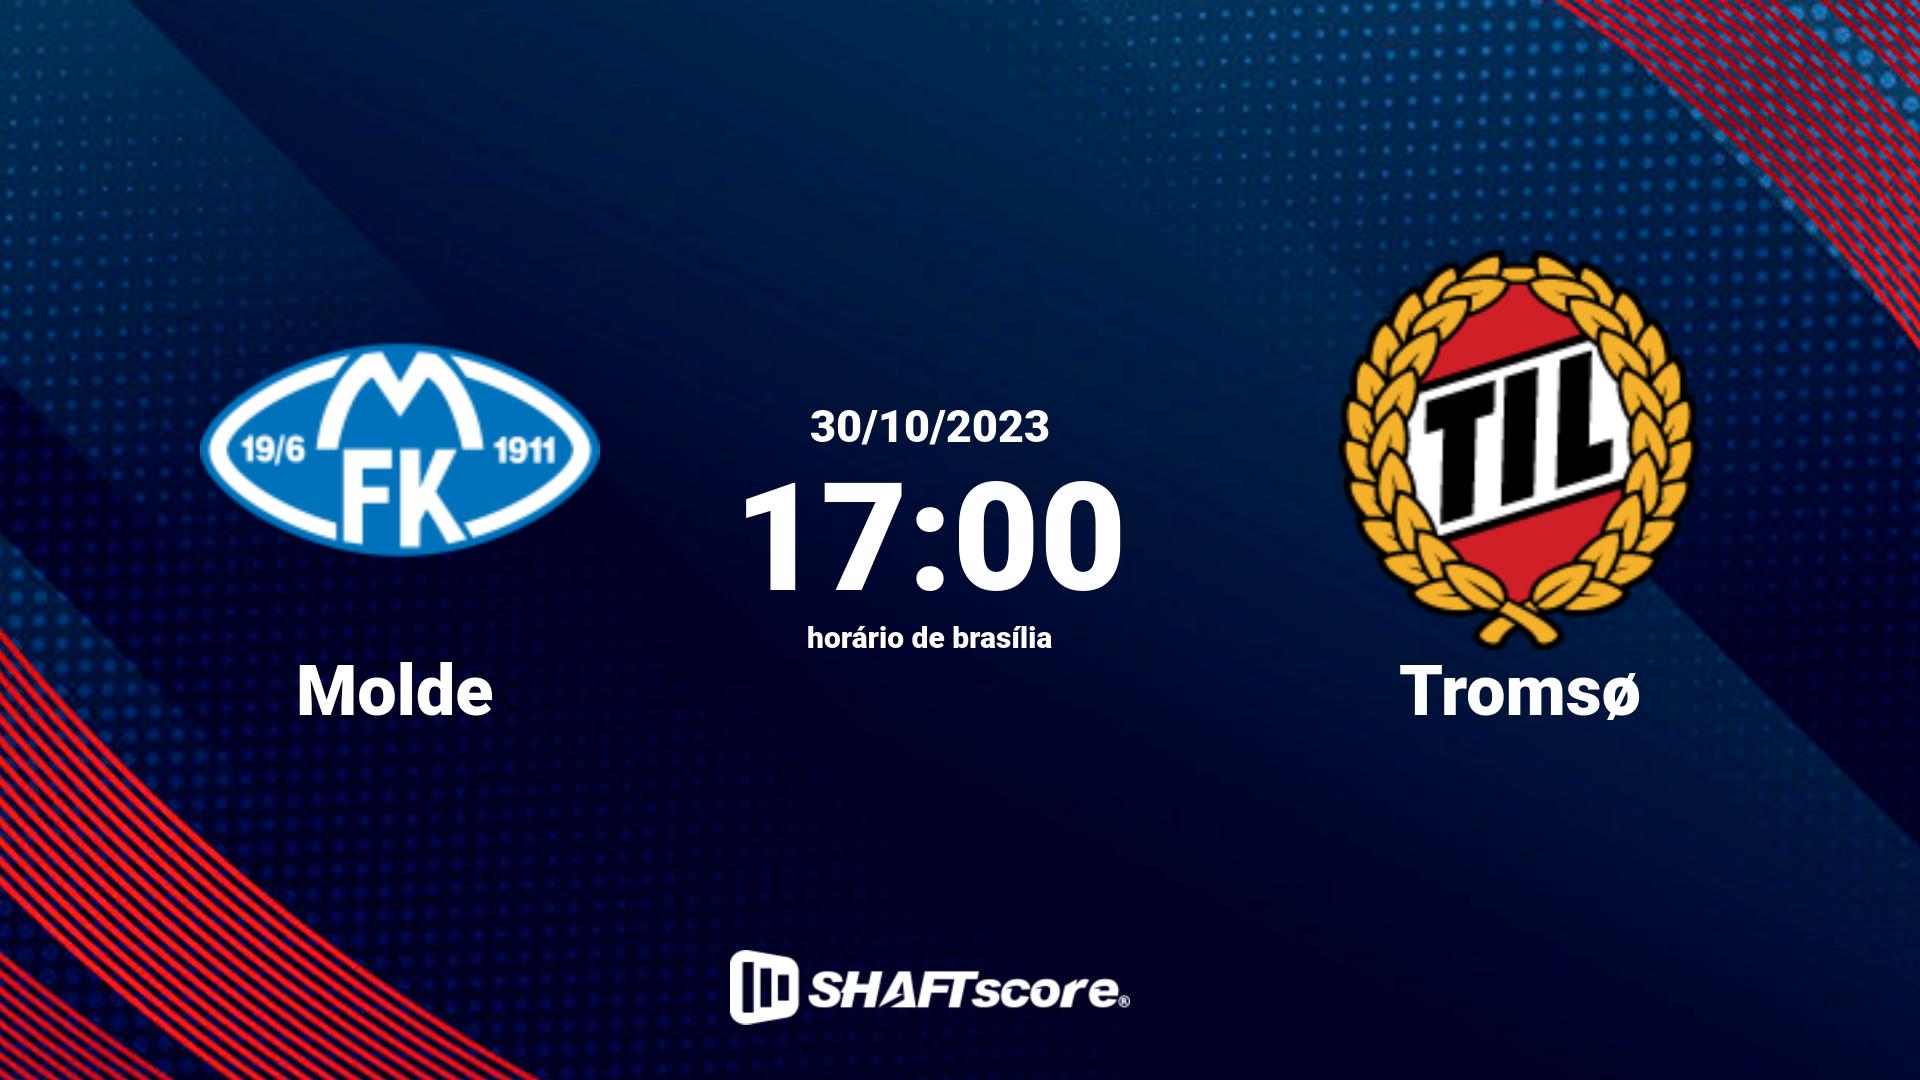 Estatísticas do jogo Molde vs Tromsø 30.10 17:00